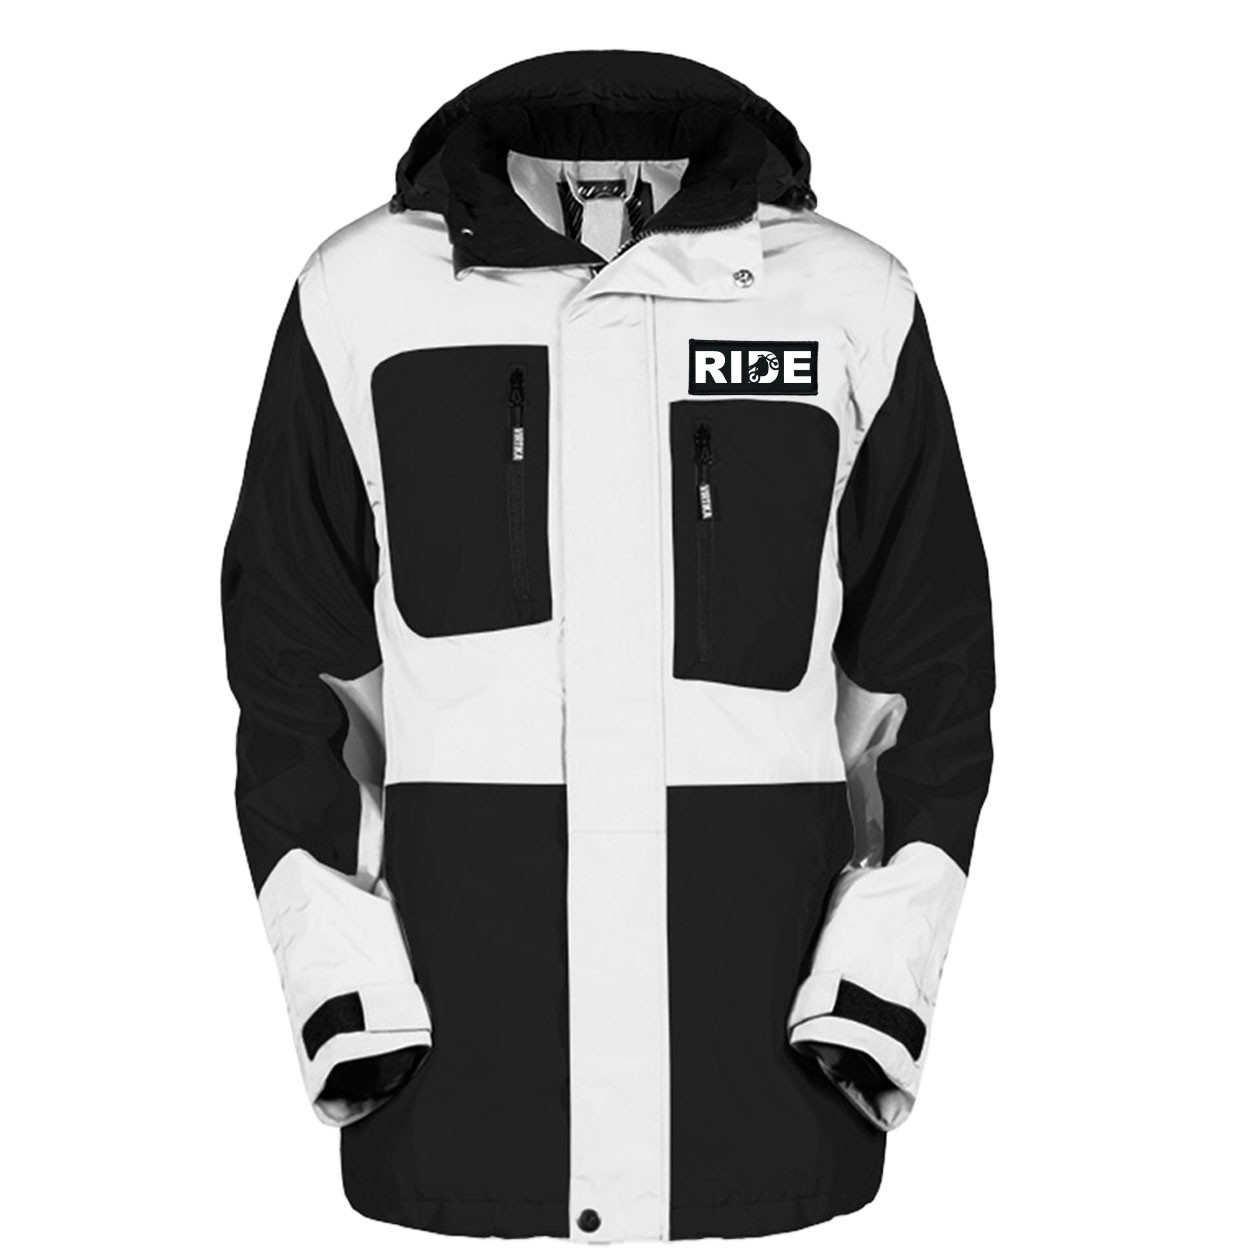 Ride Moto Logo Classic Woven Patch Pro Snowboard Jacket (Black/White)